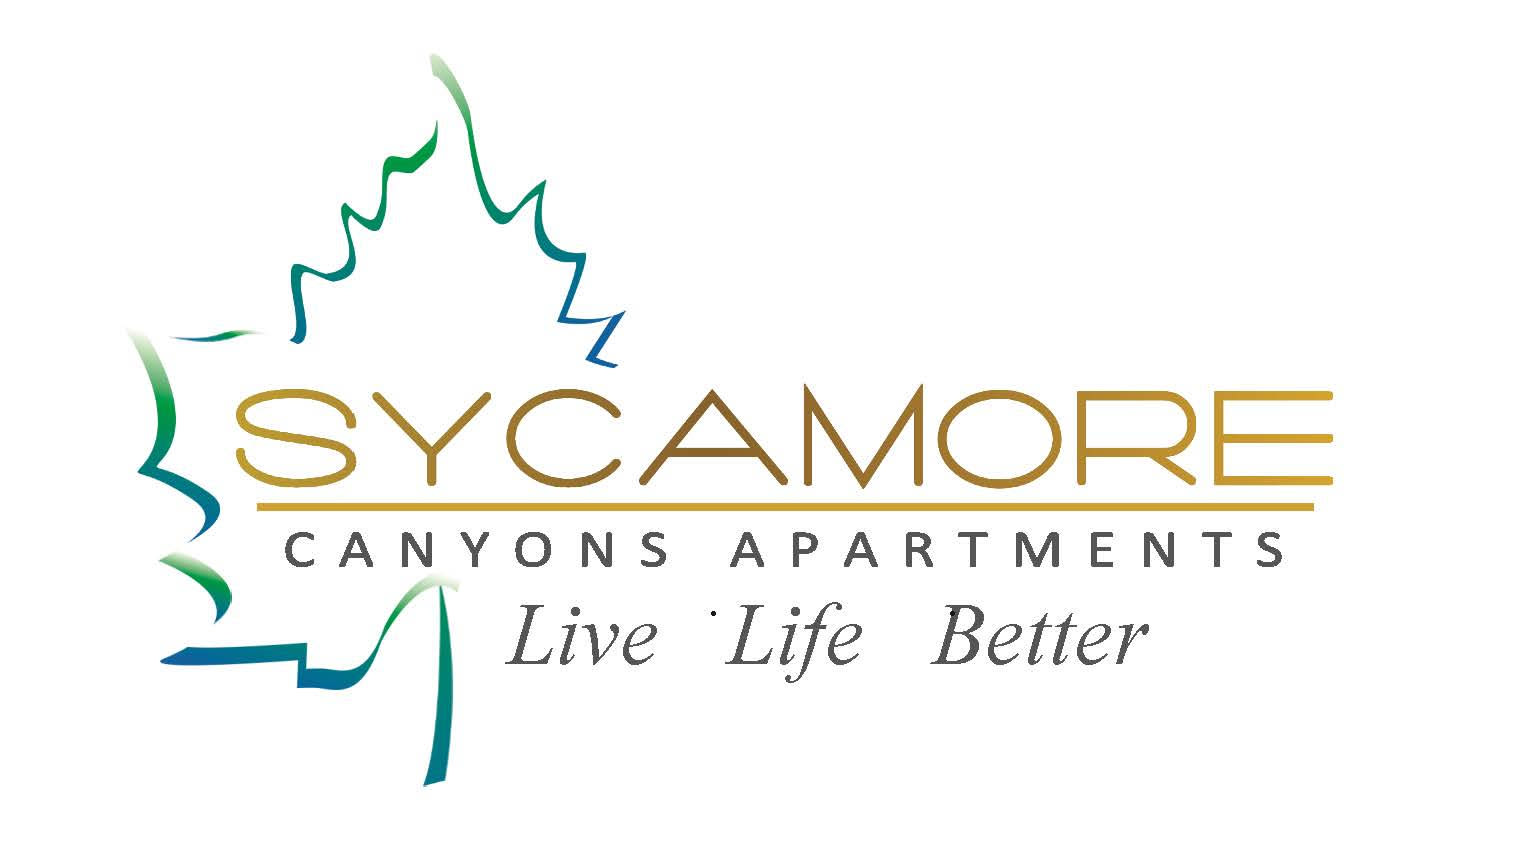 Sycamore Canyons Apartments